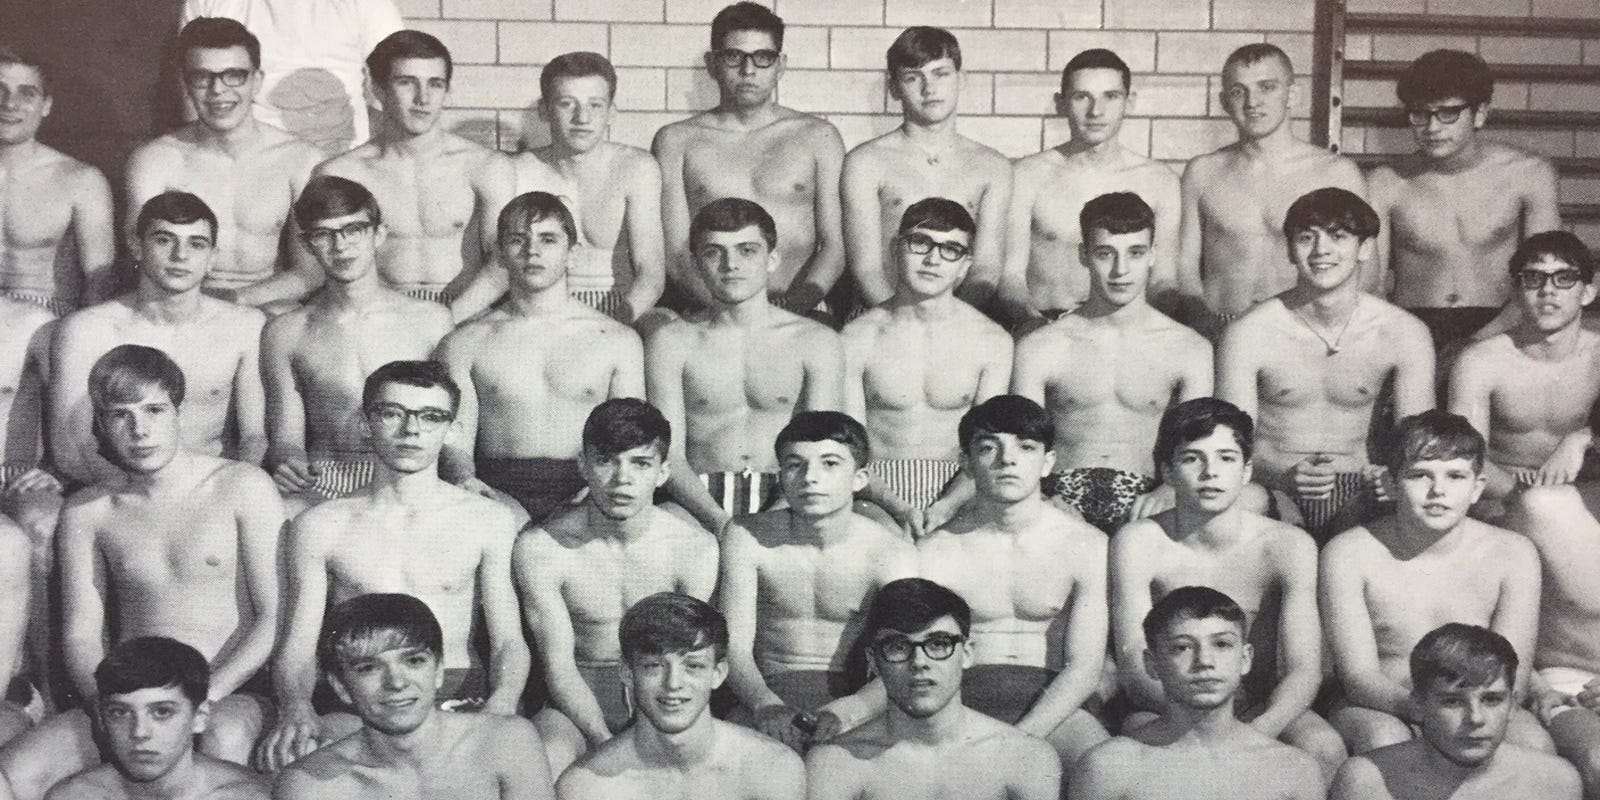 Nudist Boner Gallery - Andreatta: When boys swam nude in gym class